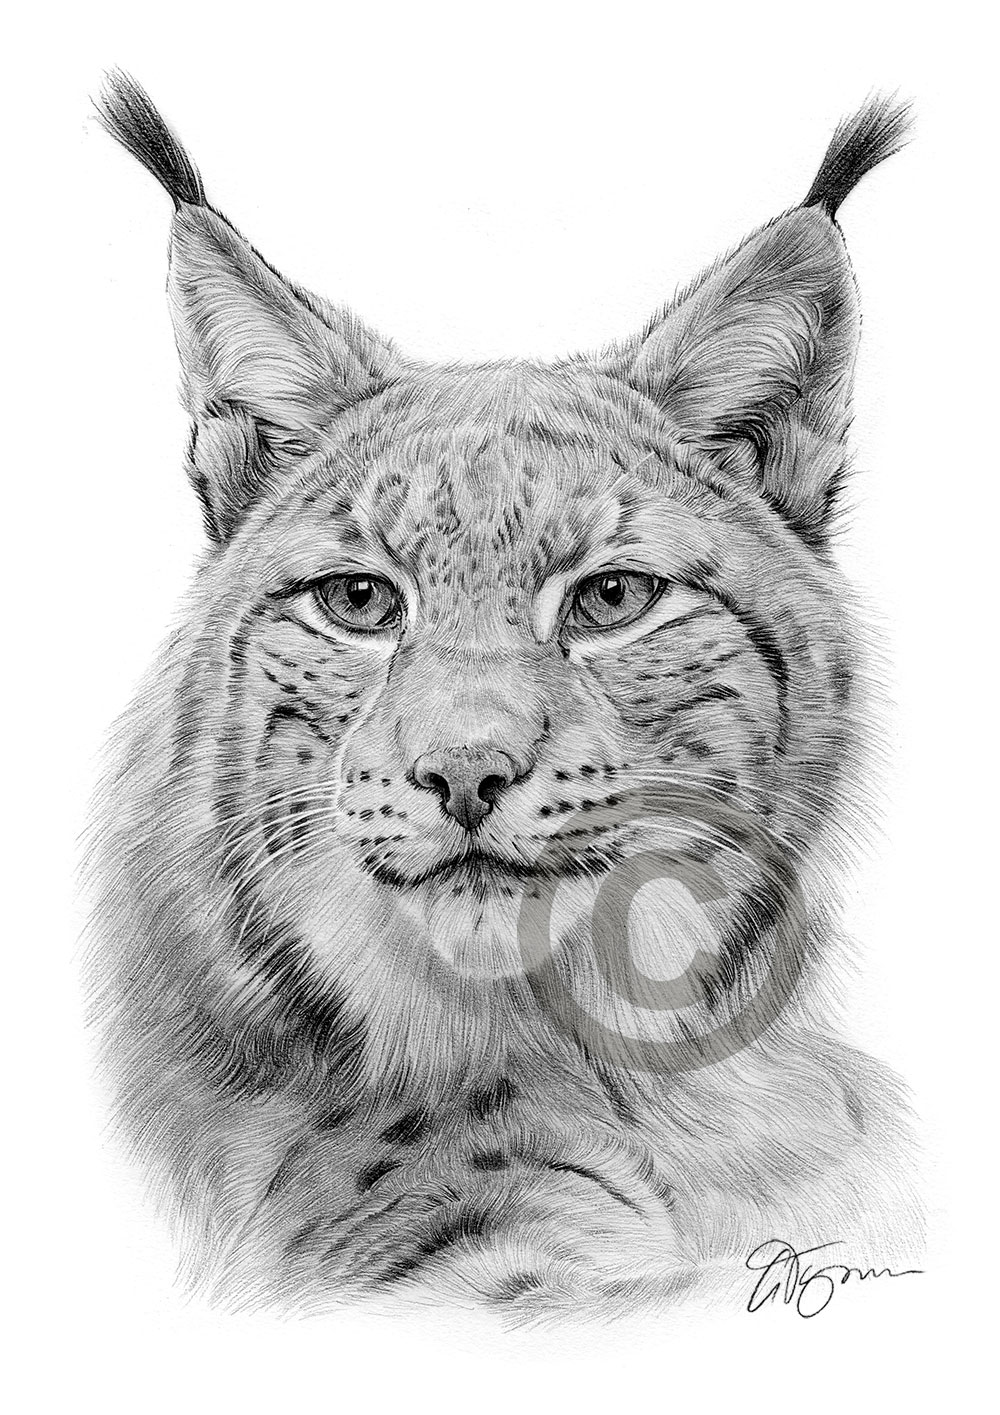 Pencil drawing of a lynx by artist Gary Tymon